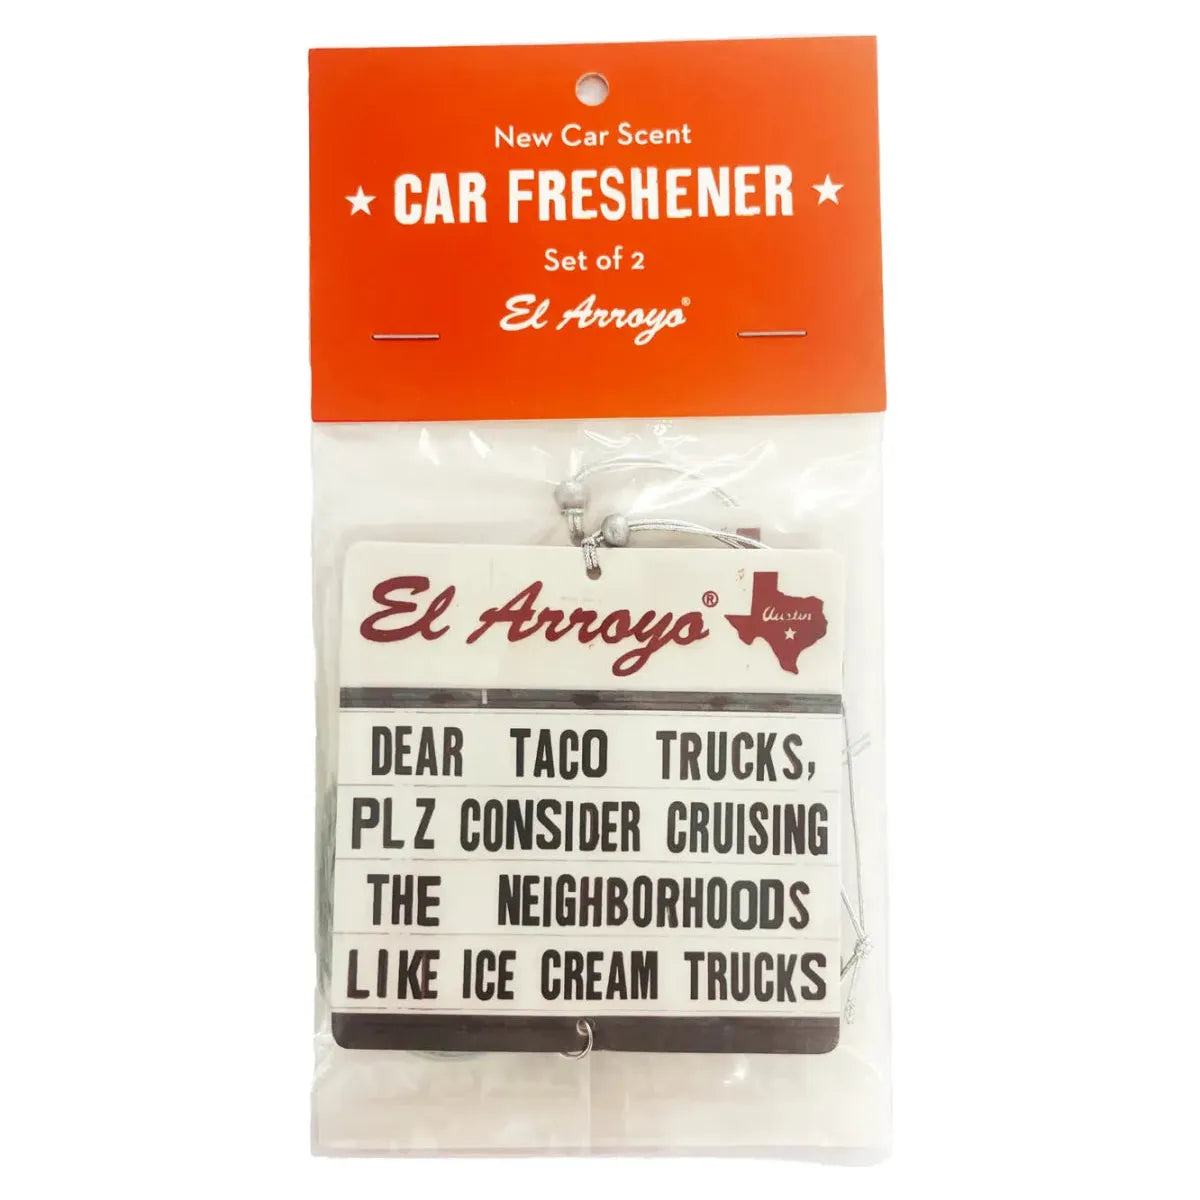 El Arroyo's Car Air Fresheners